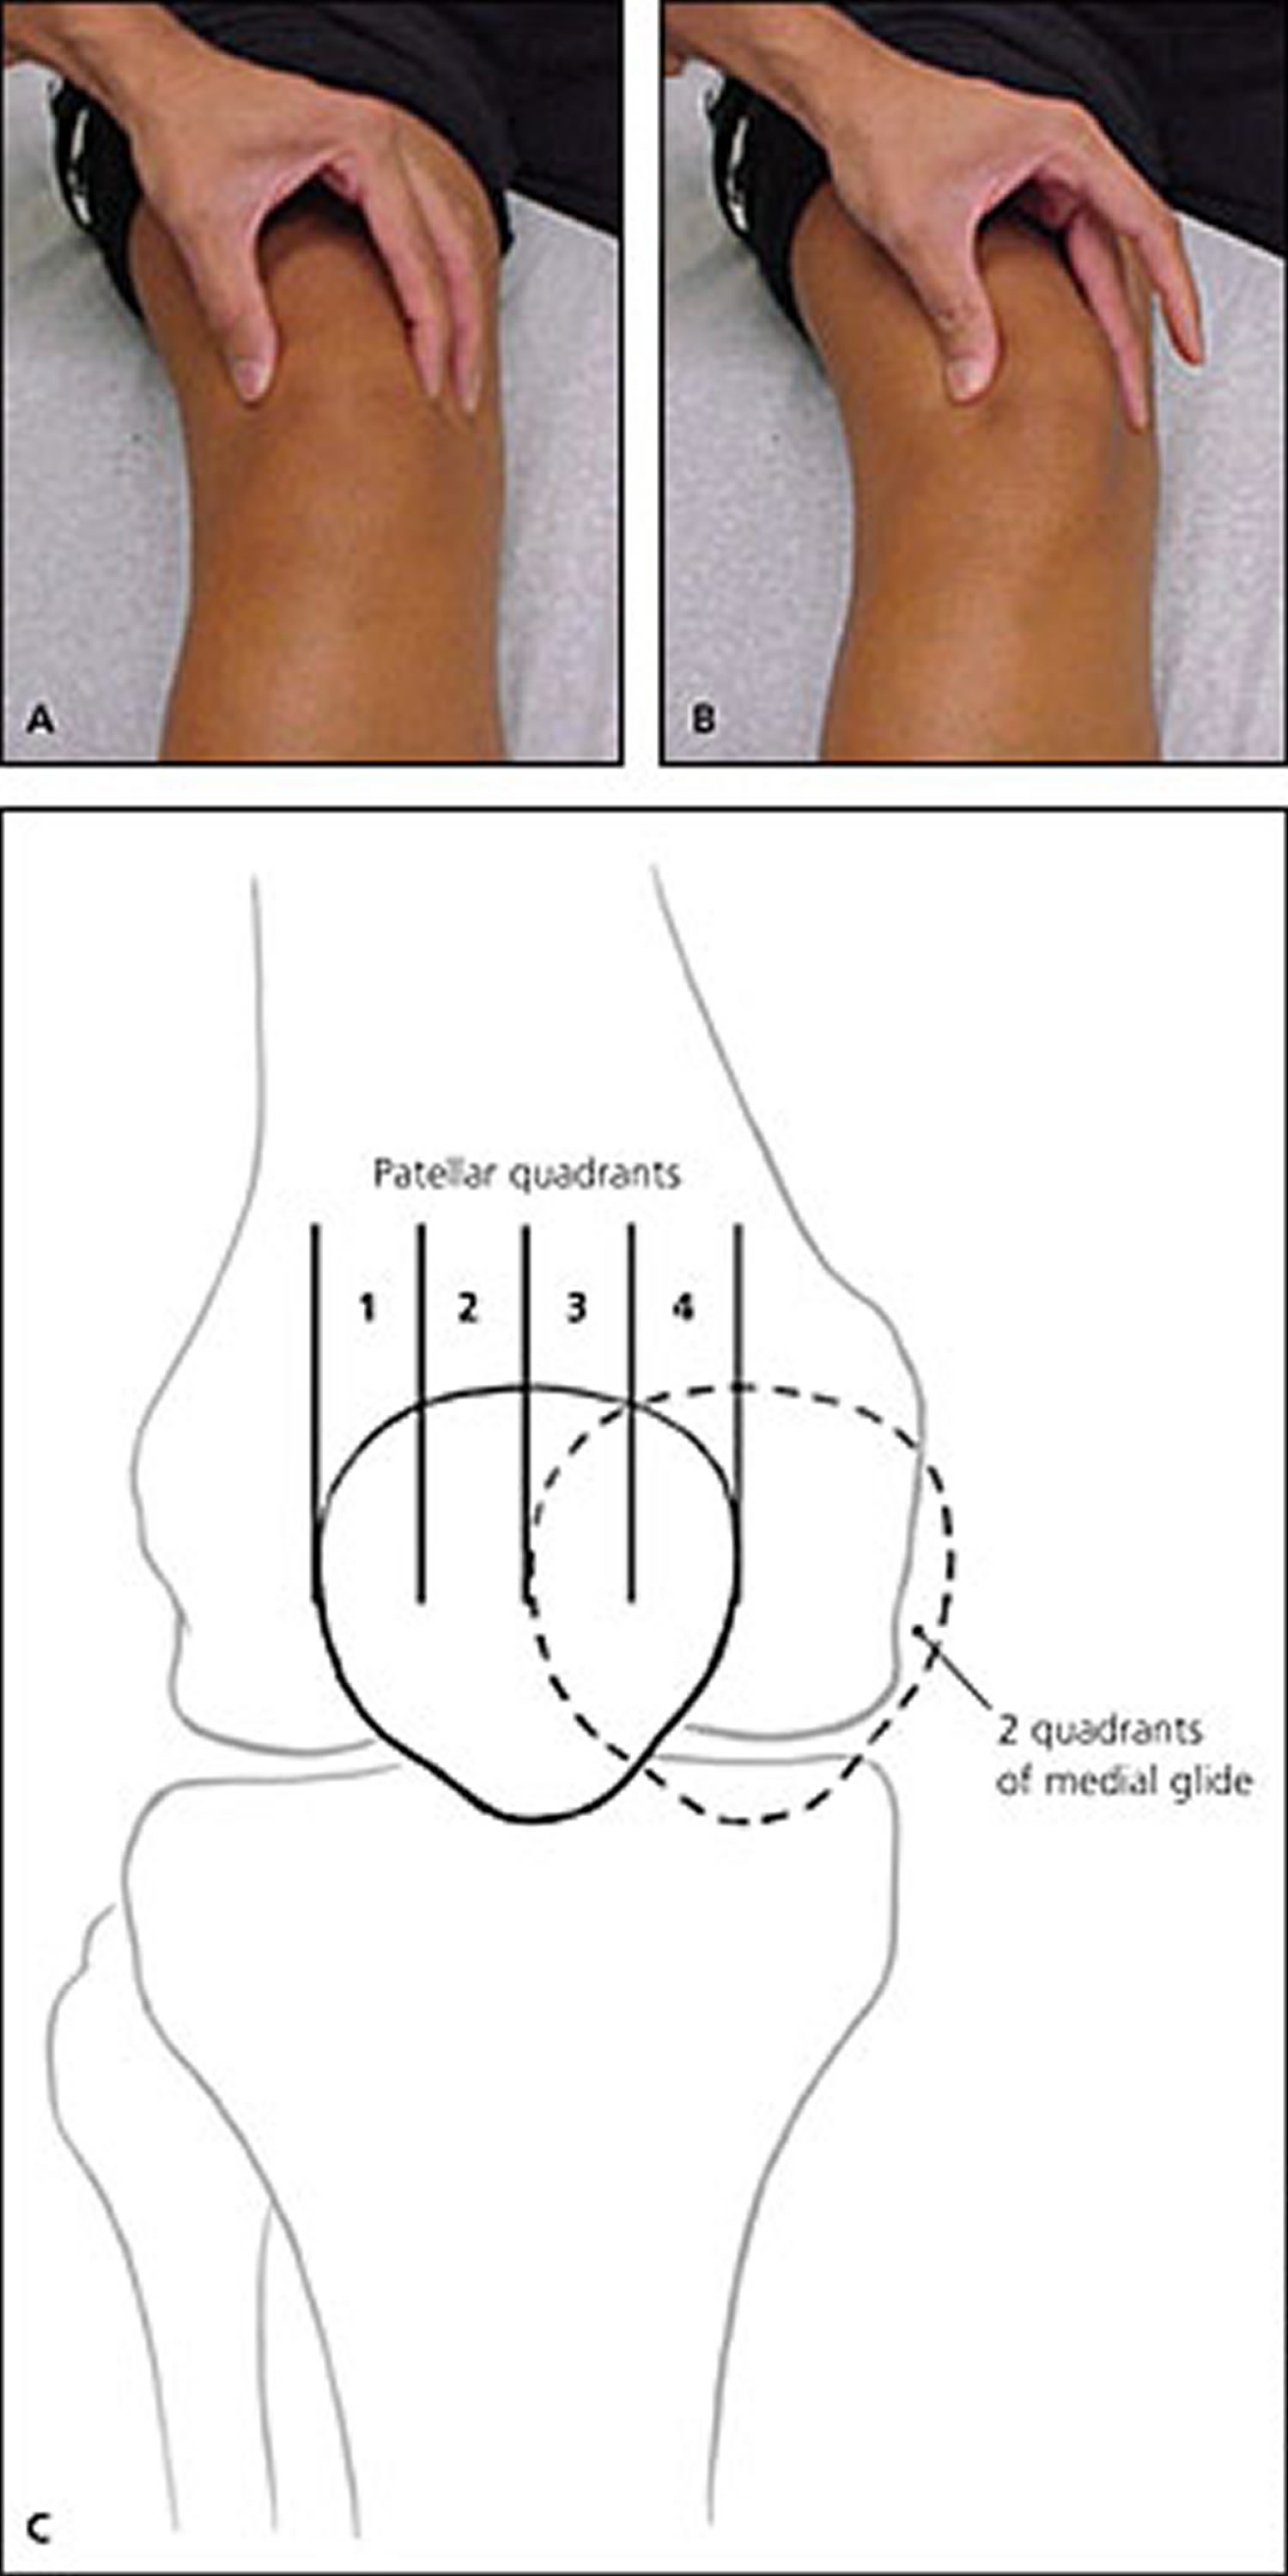 patellofemoral pain syndrome - patellar glide test